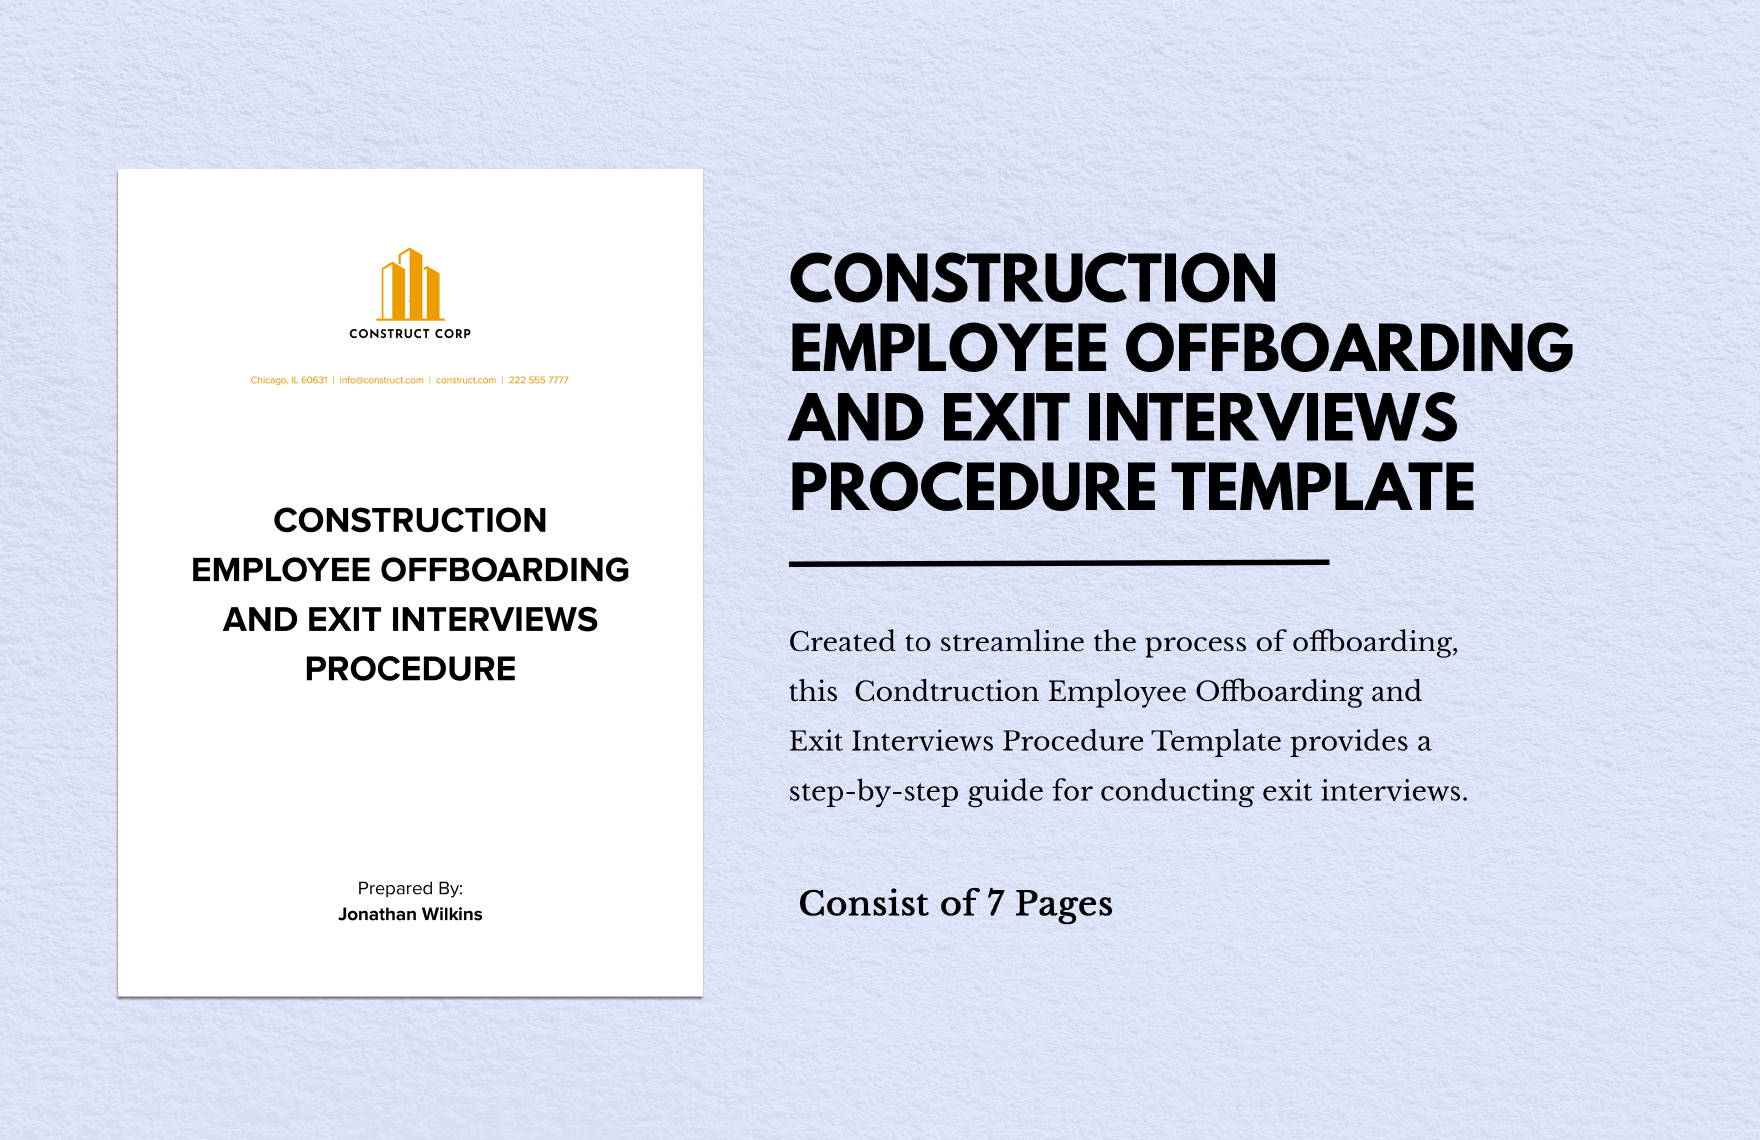 Construction Employee Offboarding and Exit Interviews Procedure